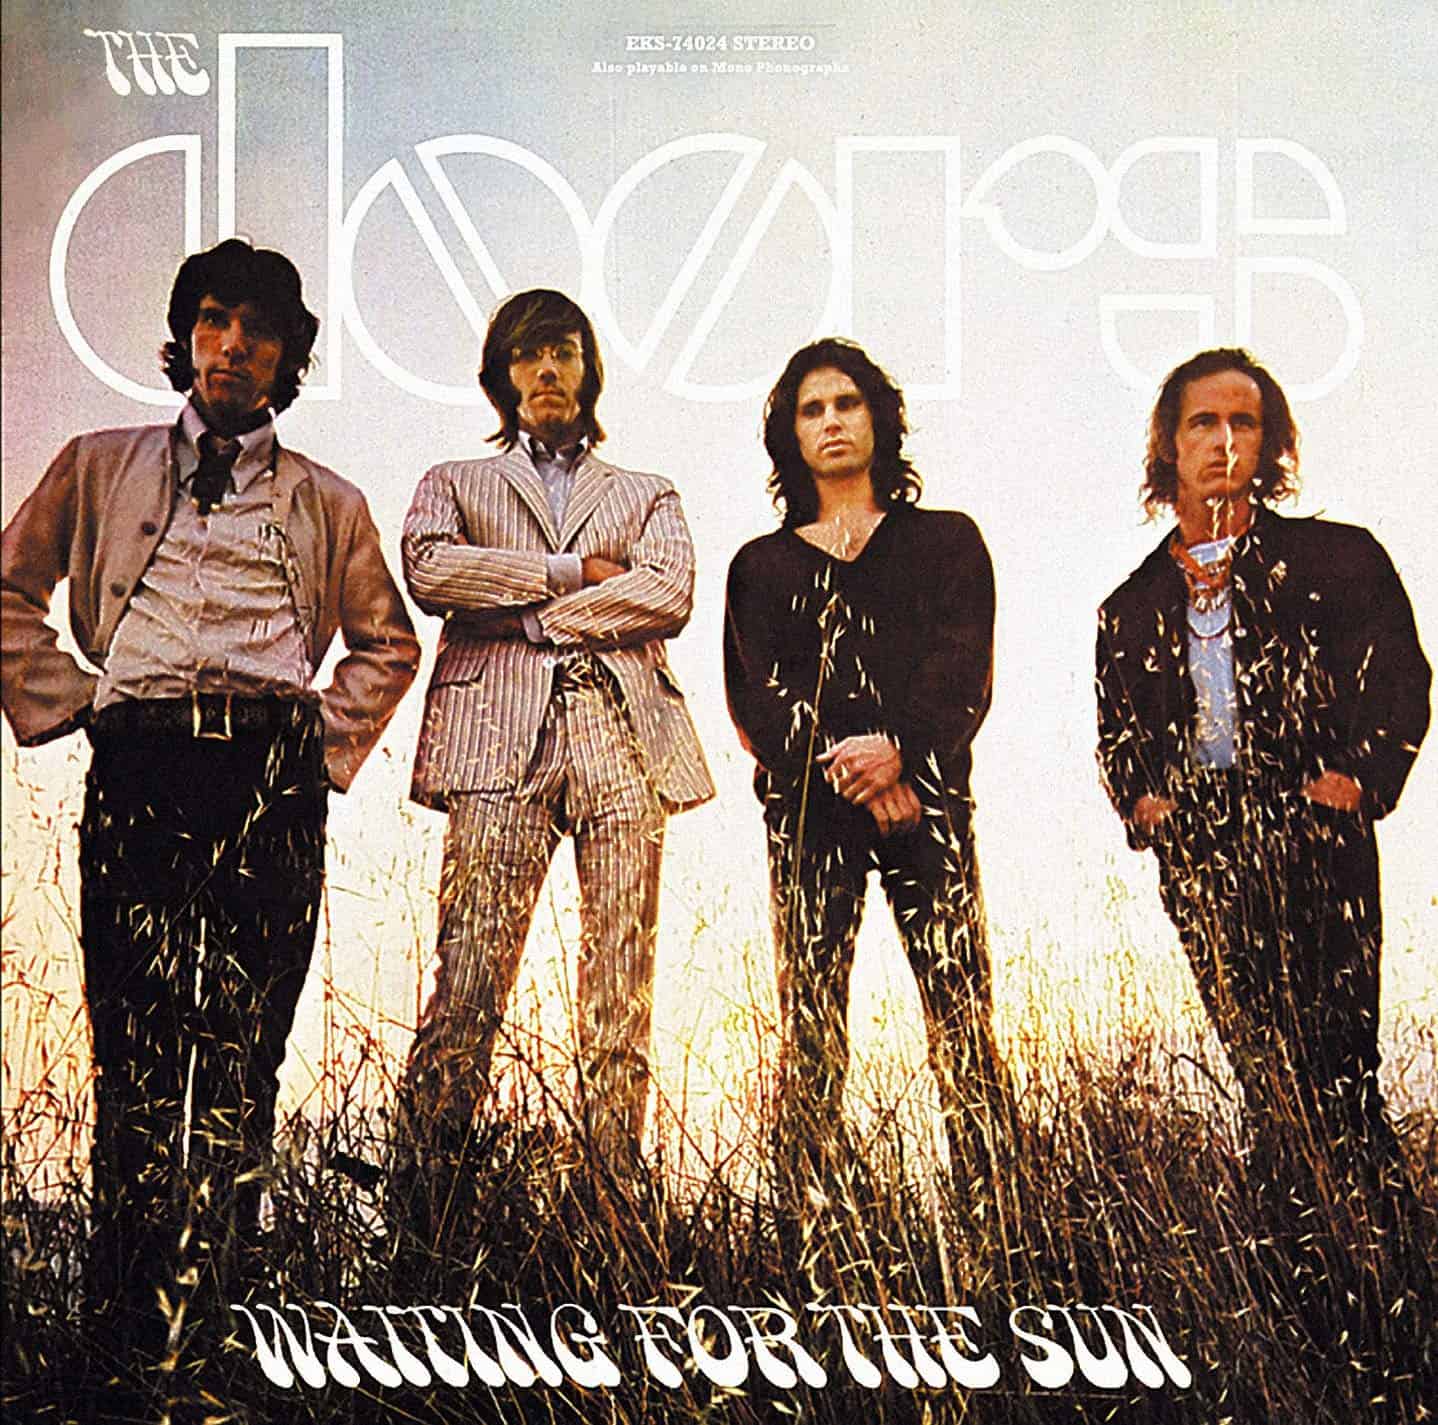 The-Doors-Waiting-for-the-Sun-vinyl-lp-record-album-front